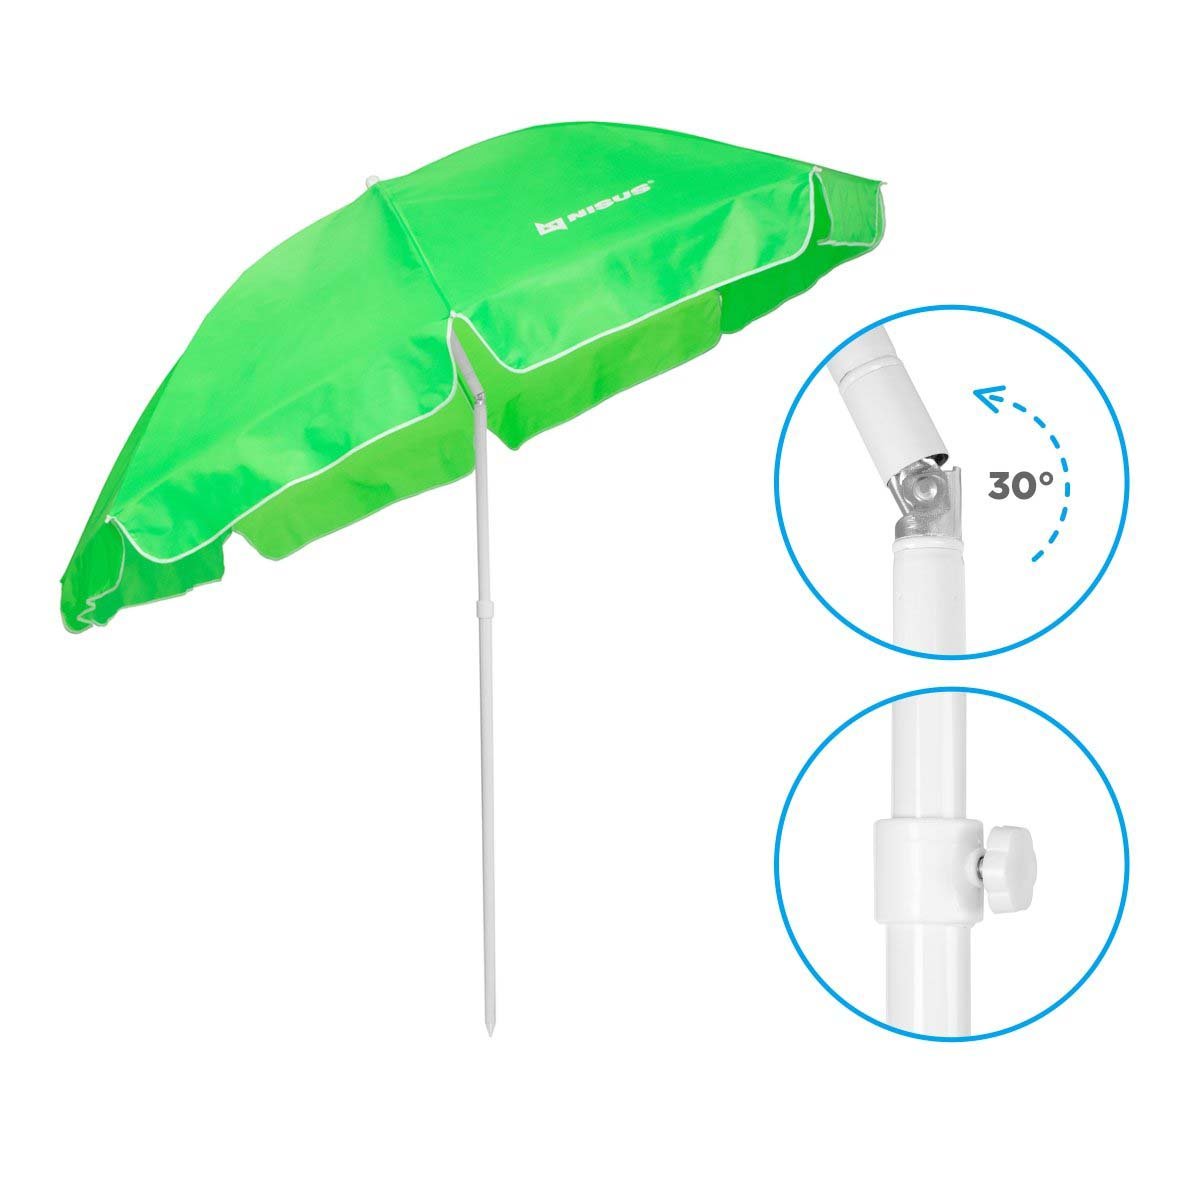 Green Tilting Beach Umbrella featuring a 30 inclination degree